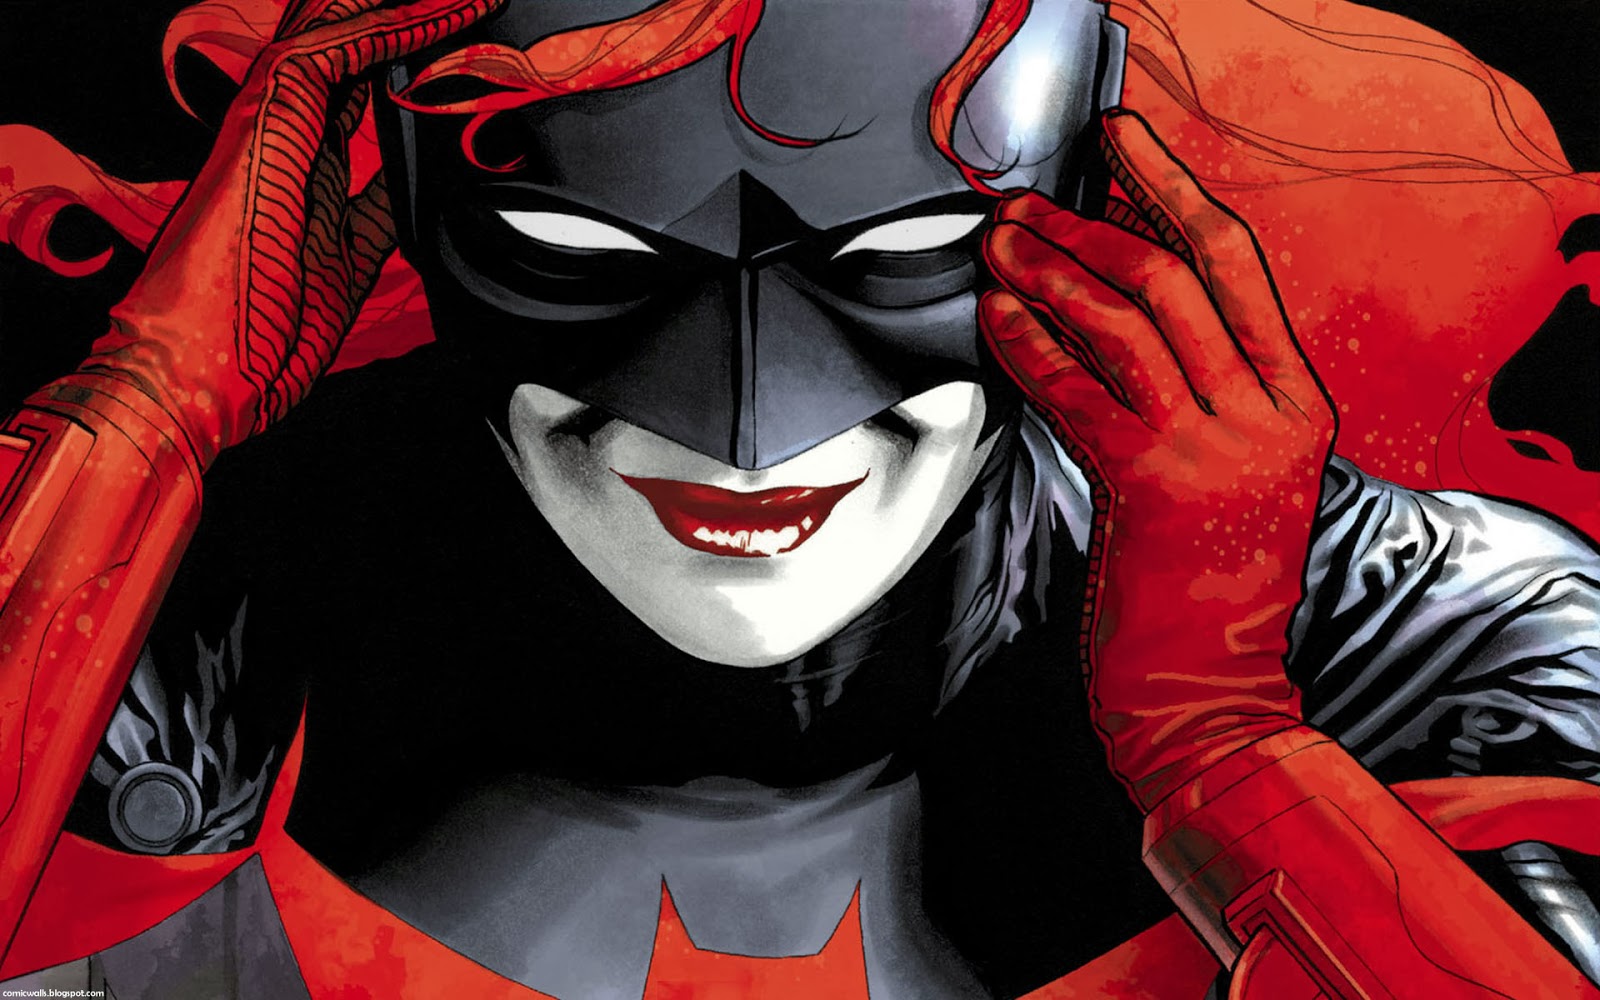 batwoman壁紙,架空の人物,超悪役,スーパーヒーロー,図